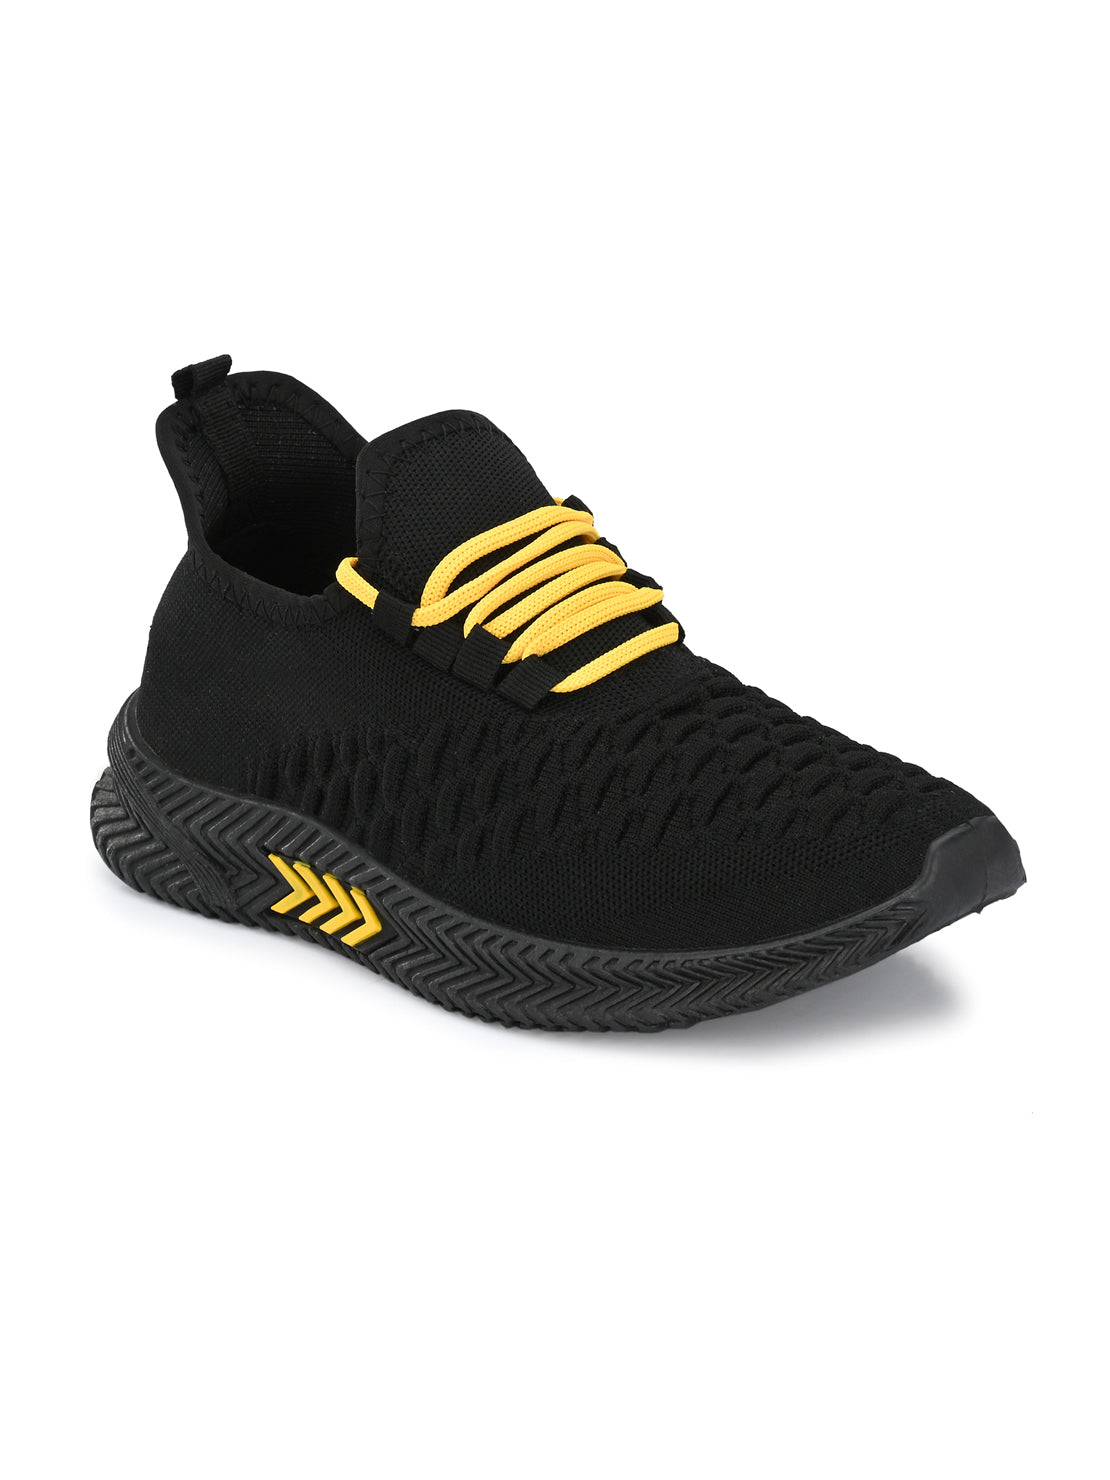 Hirolas® Men's Black Knitted Running/Walking/Gym Lace Up Sneaker Sport Shoes (HRL2040BLK)